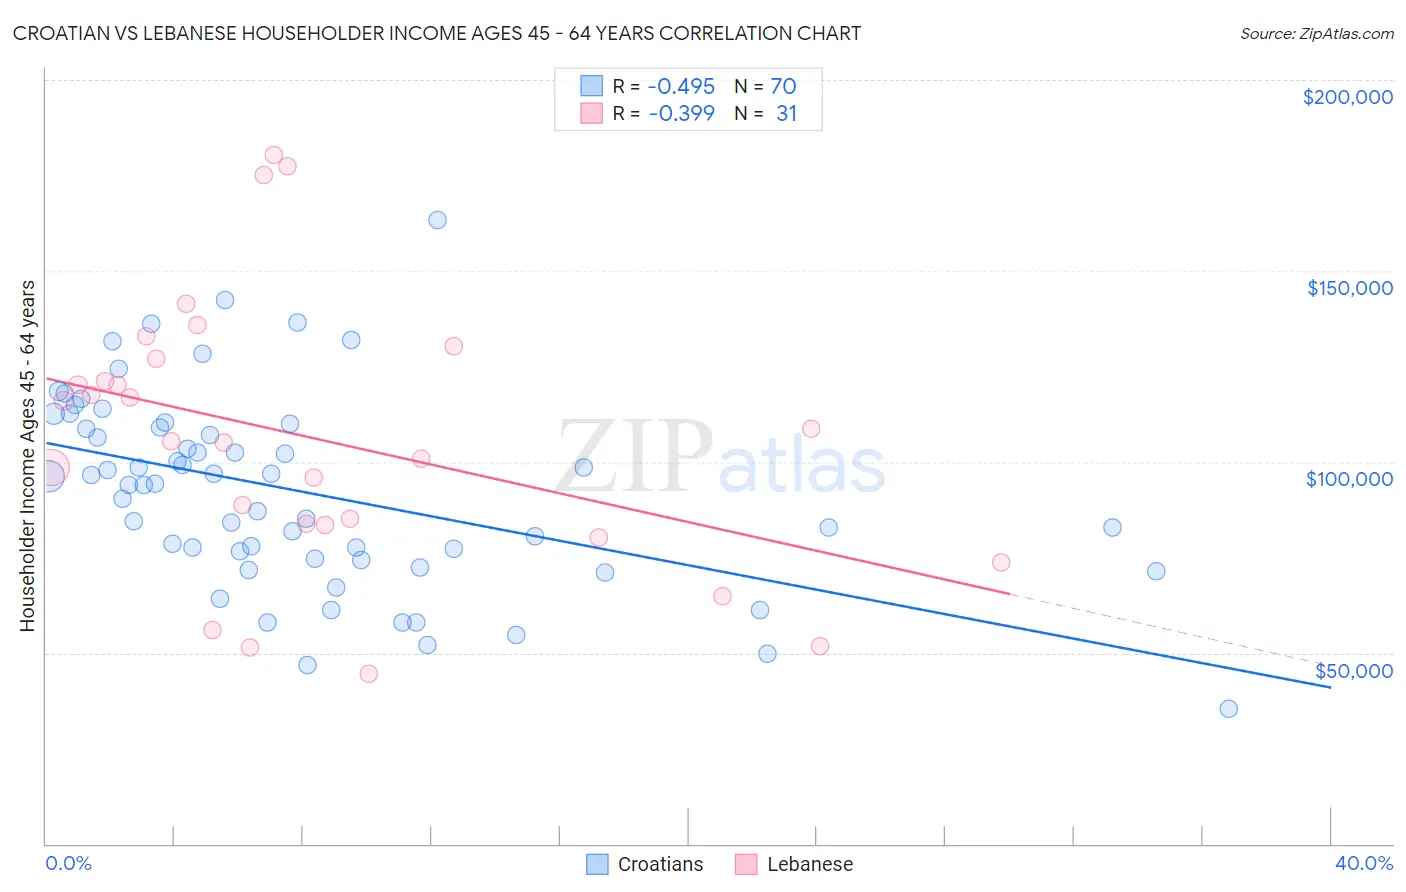 Croatian vs Lebanese Householder Income Ages 45 - 64 years